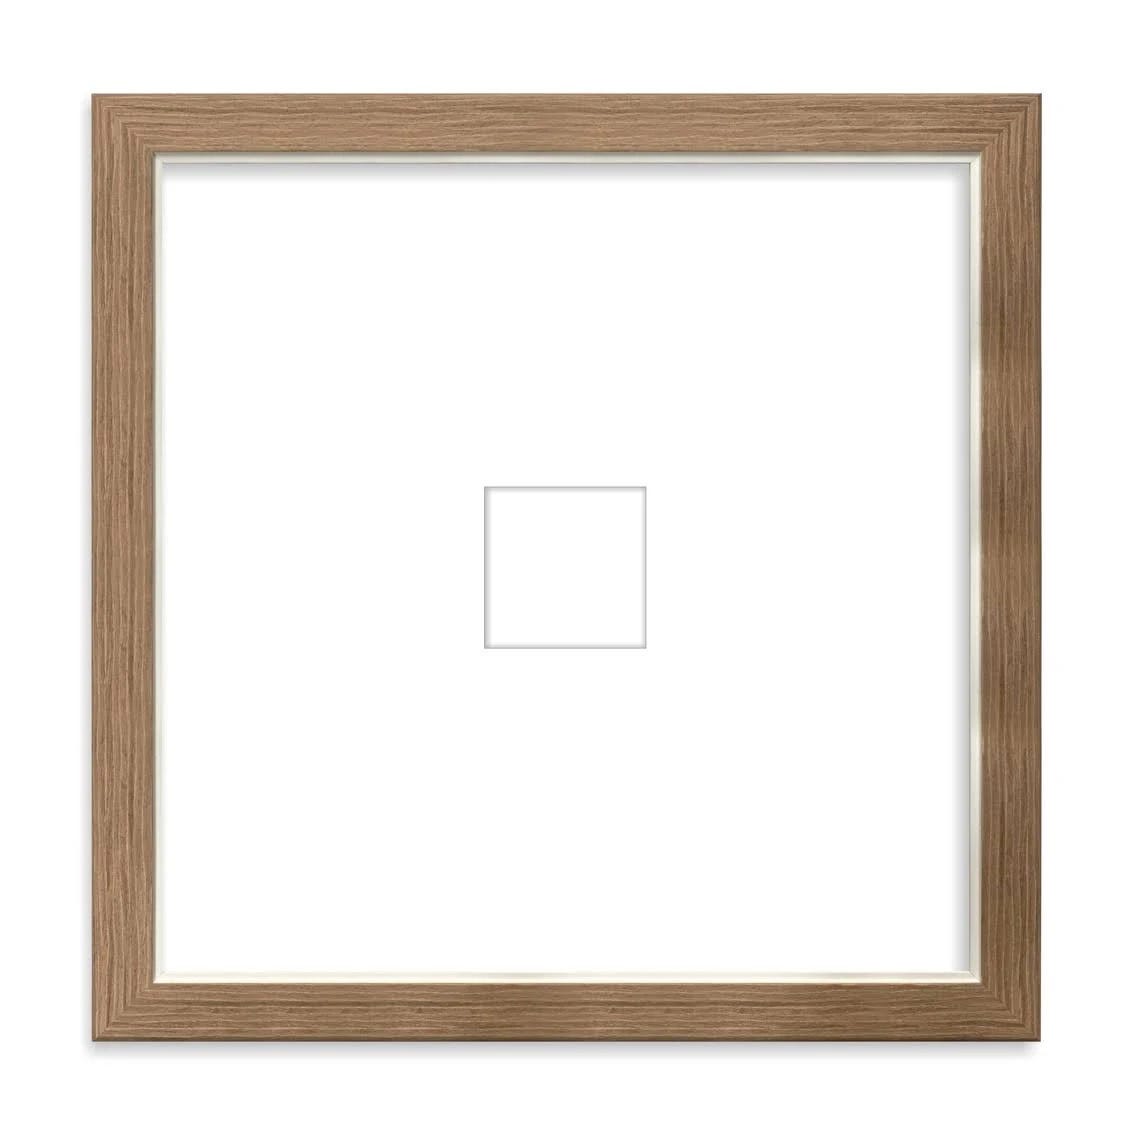 Latte Grain Wood Picture Frame: 18x18 Size | Image